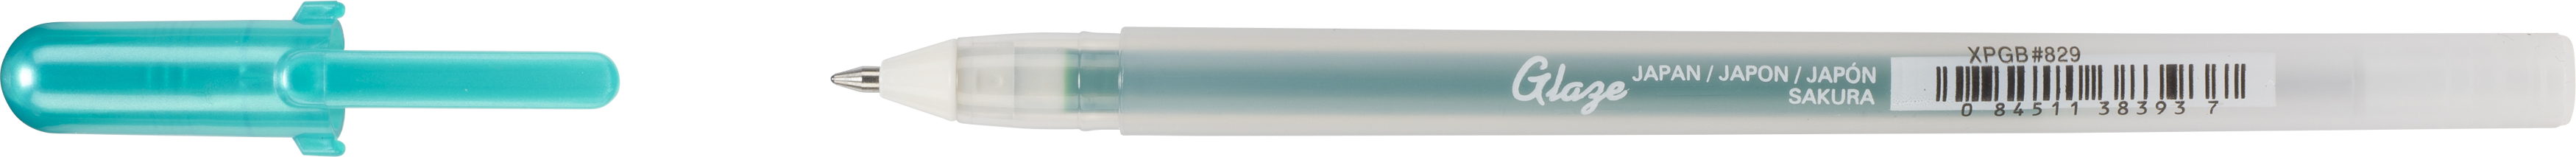 SAKURA Gelly Roll 0.7mm XPGB829 Glaze Green